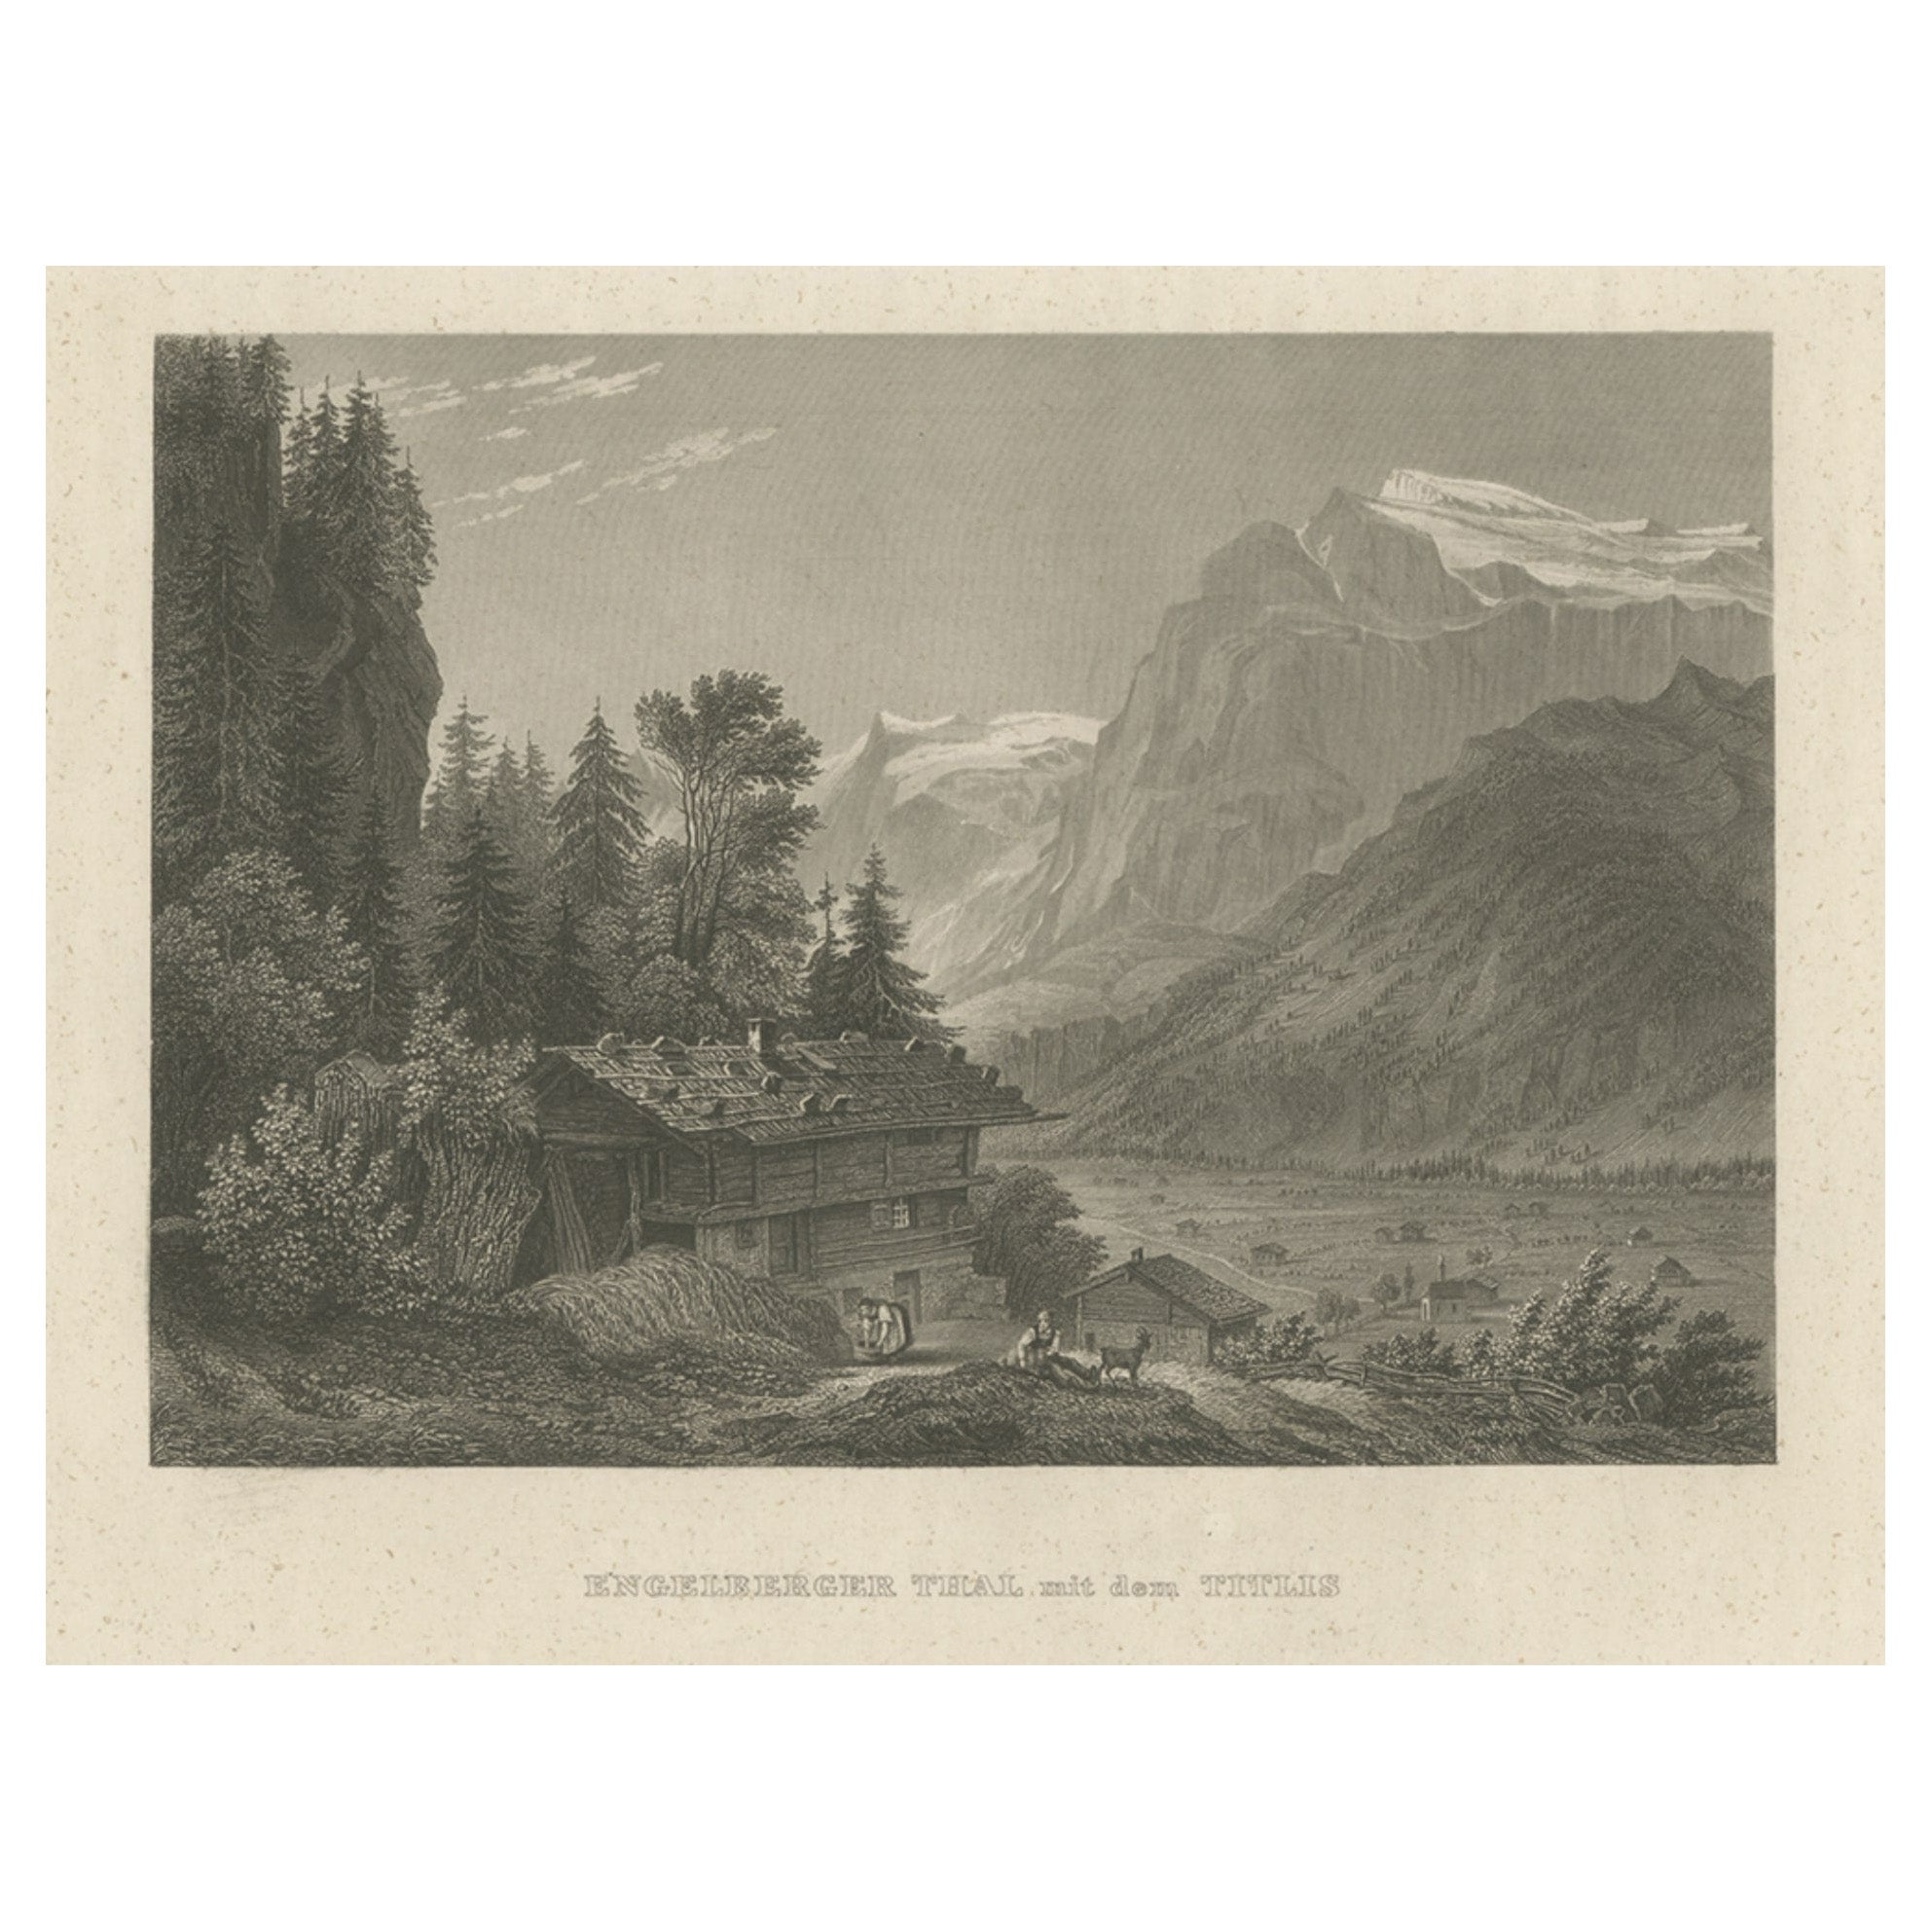 Antique Print of the Engelberg Valley in Switzerland, c.1860